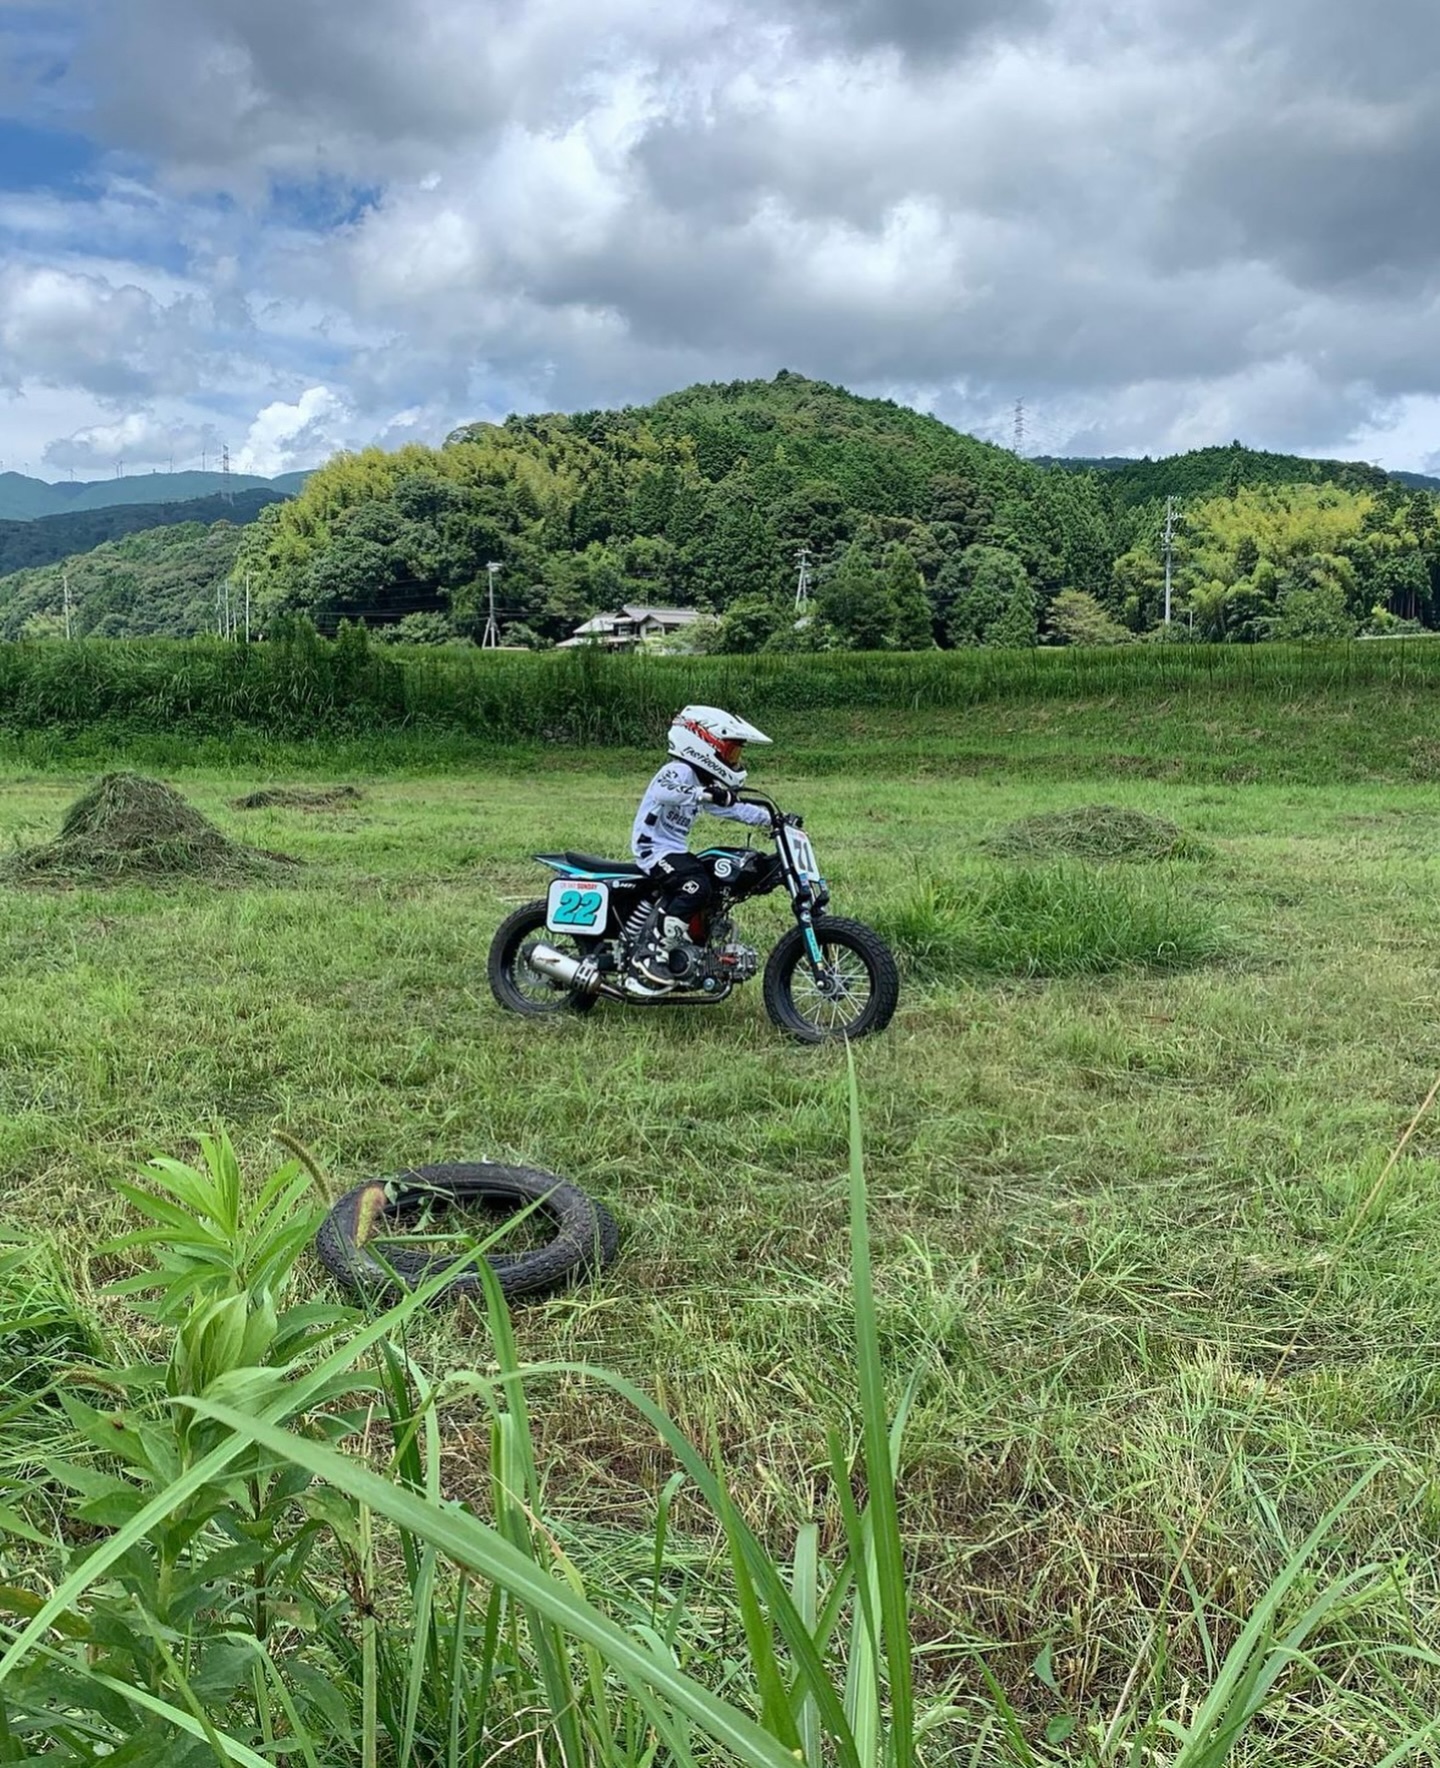 There’s no age limit to having fun on a SUNDAY 🤩
@yuhiko_you_hirao 
—
#sundaymotors #flattrack #moto #motorcycle